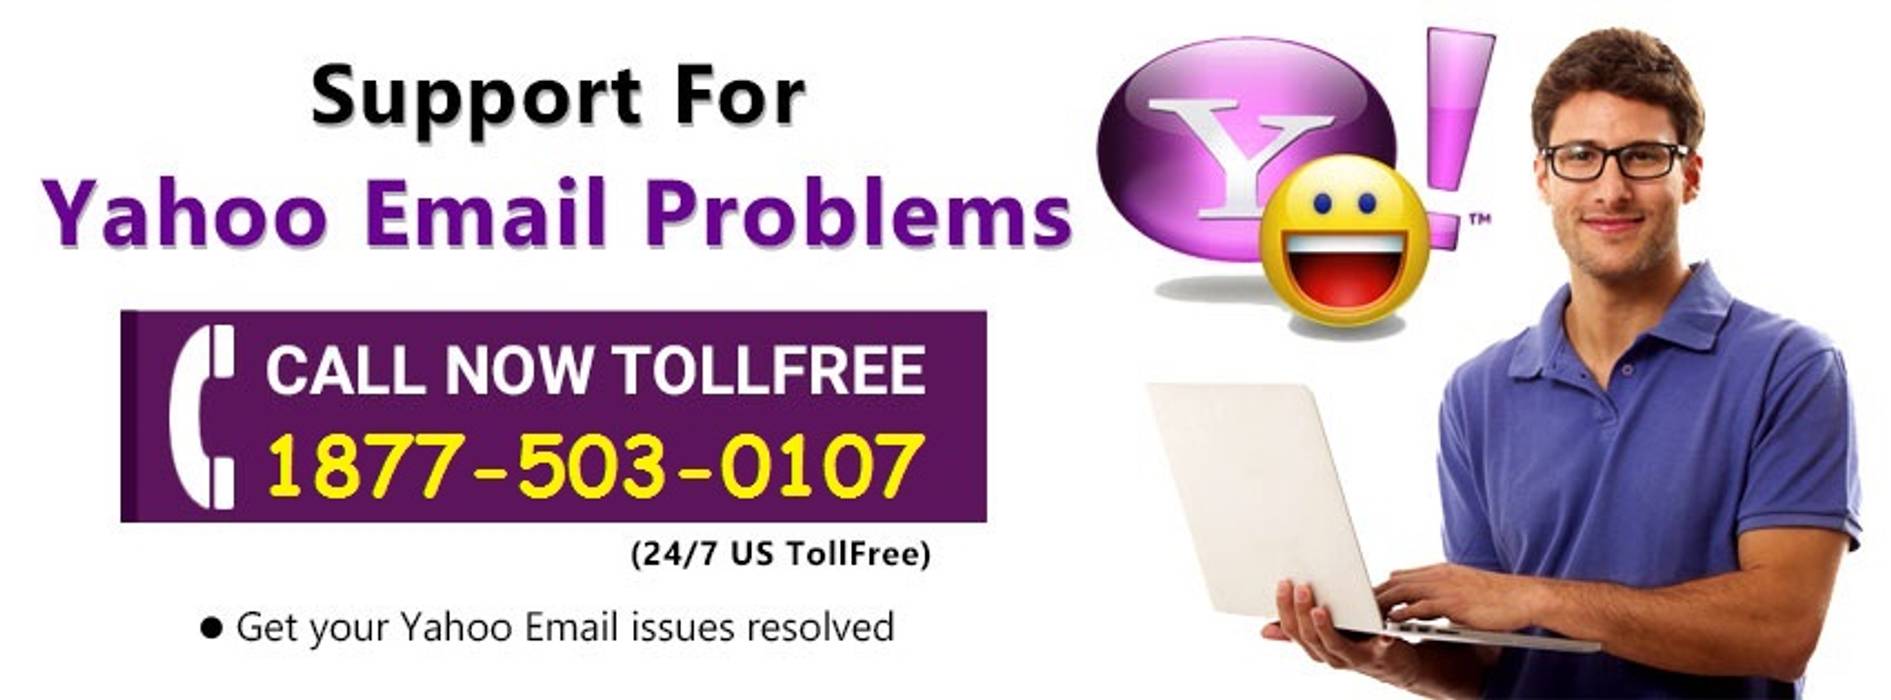 Contact Yahoo Customer Support Phone Number 1877-503-0107, Yahoo Mail Support Number 1877-503-0107 Yahoo Mail Support Number 1877-503-0107 أرضيات خشب معالج Transparent